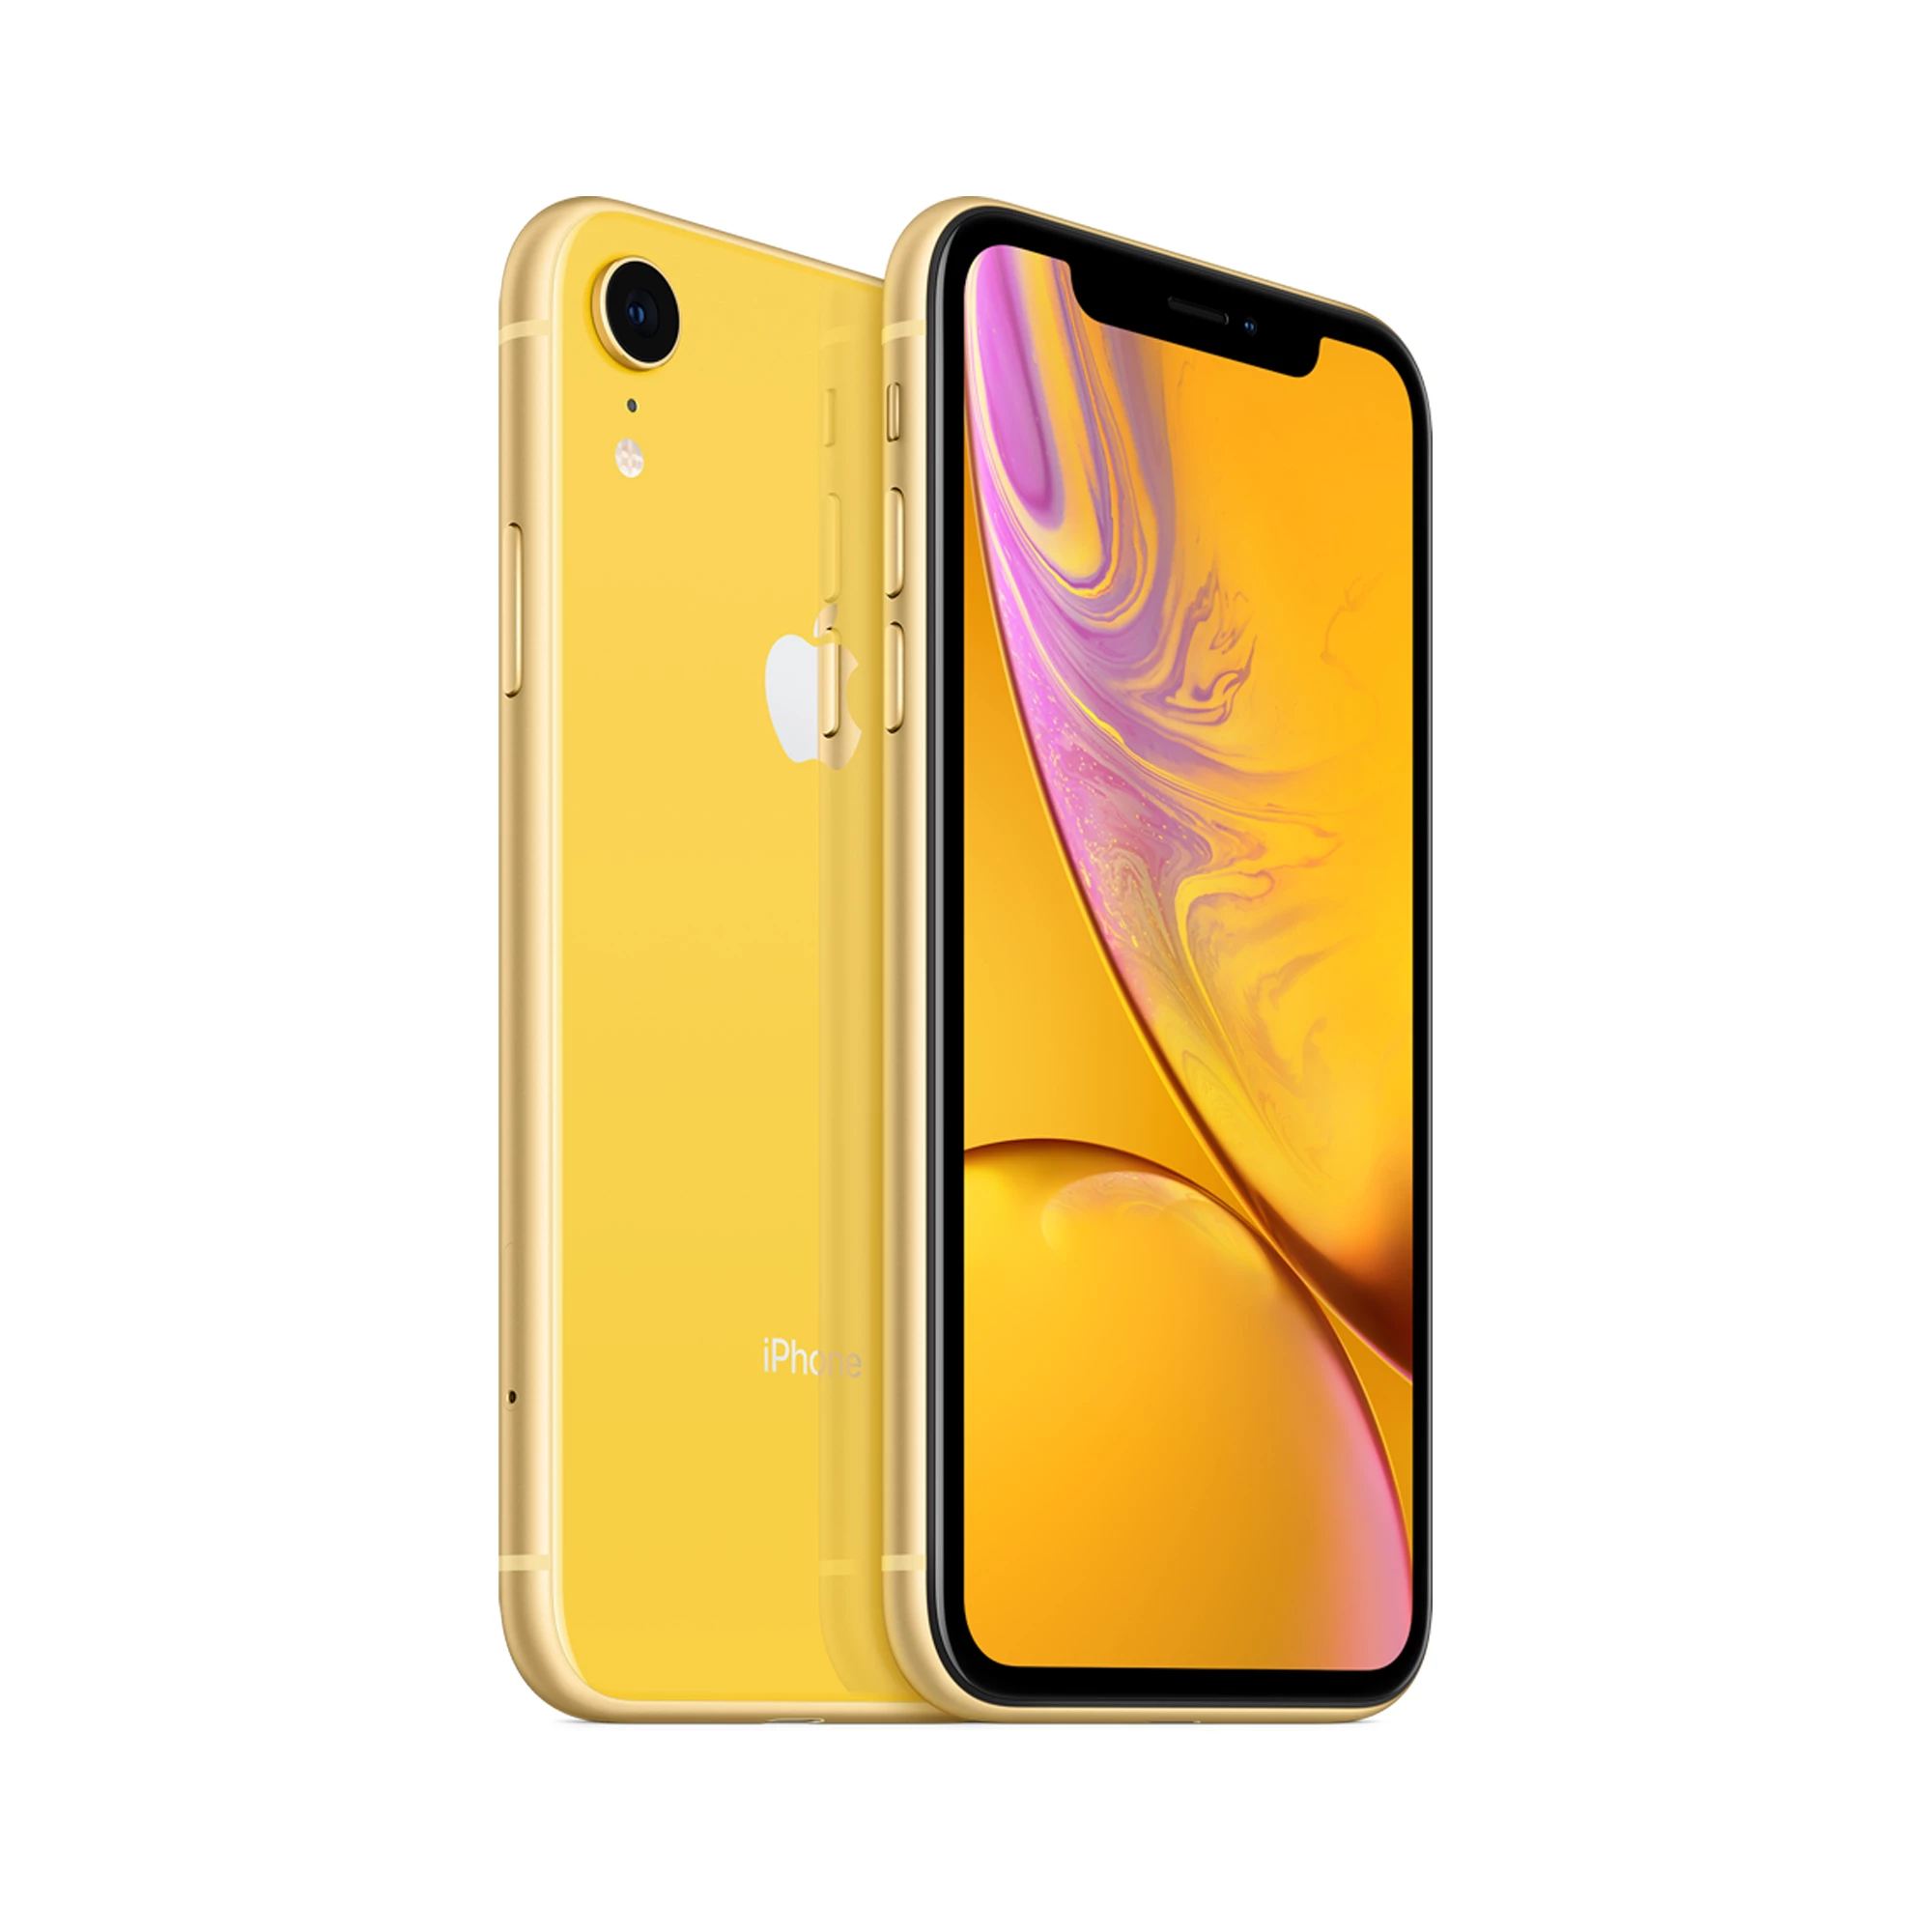 Apple iPhone XR Dual Sim 64GB Yellow (MT162)